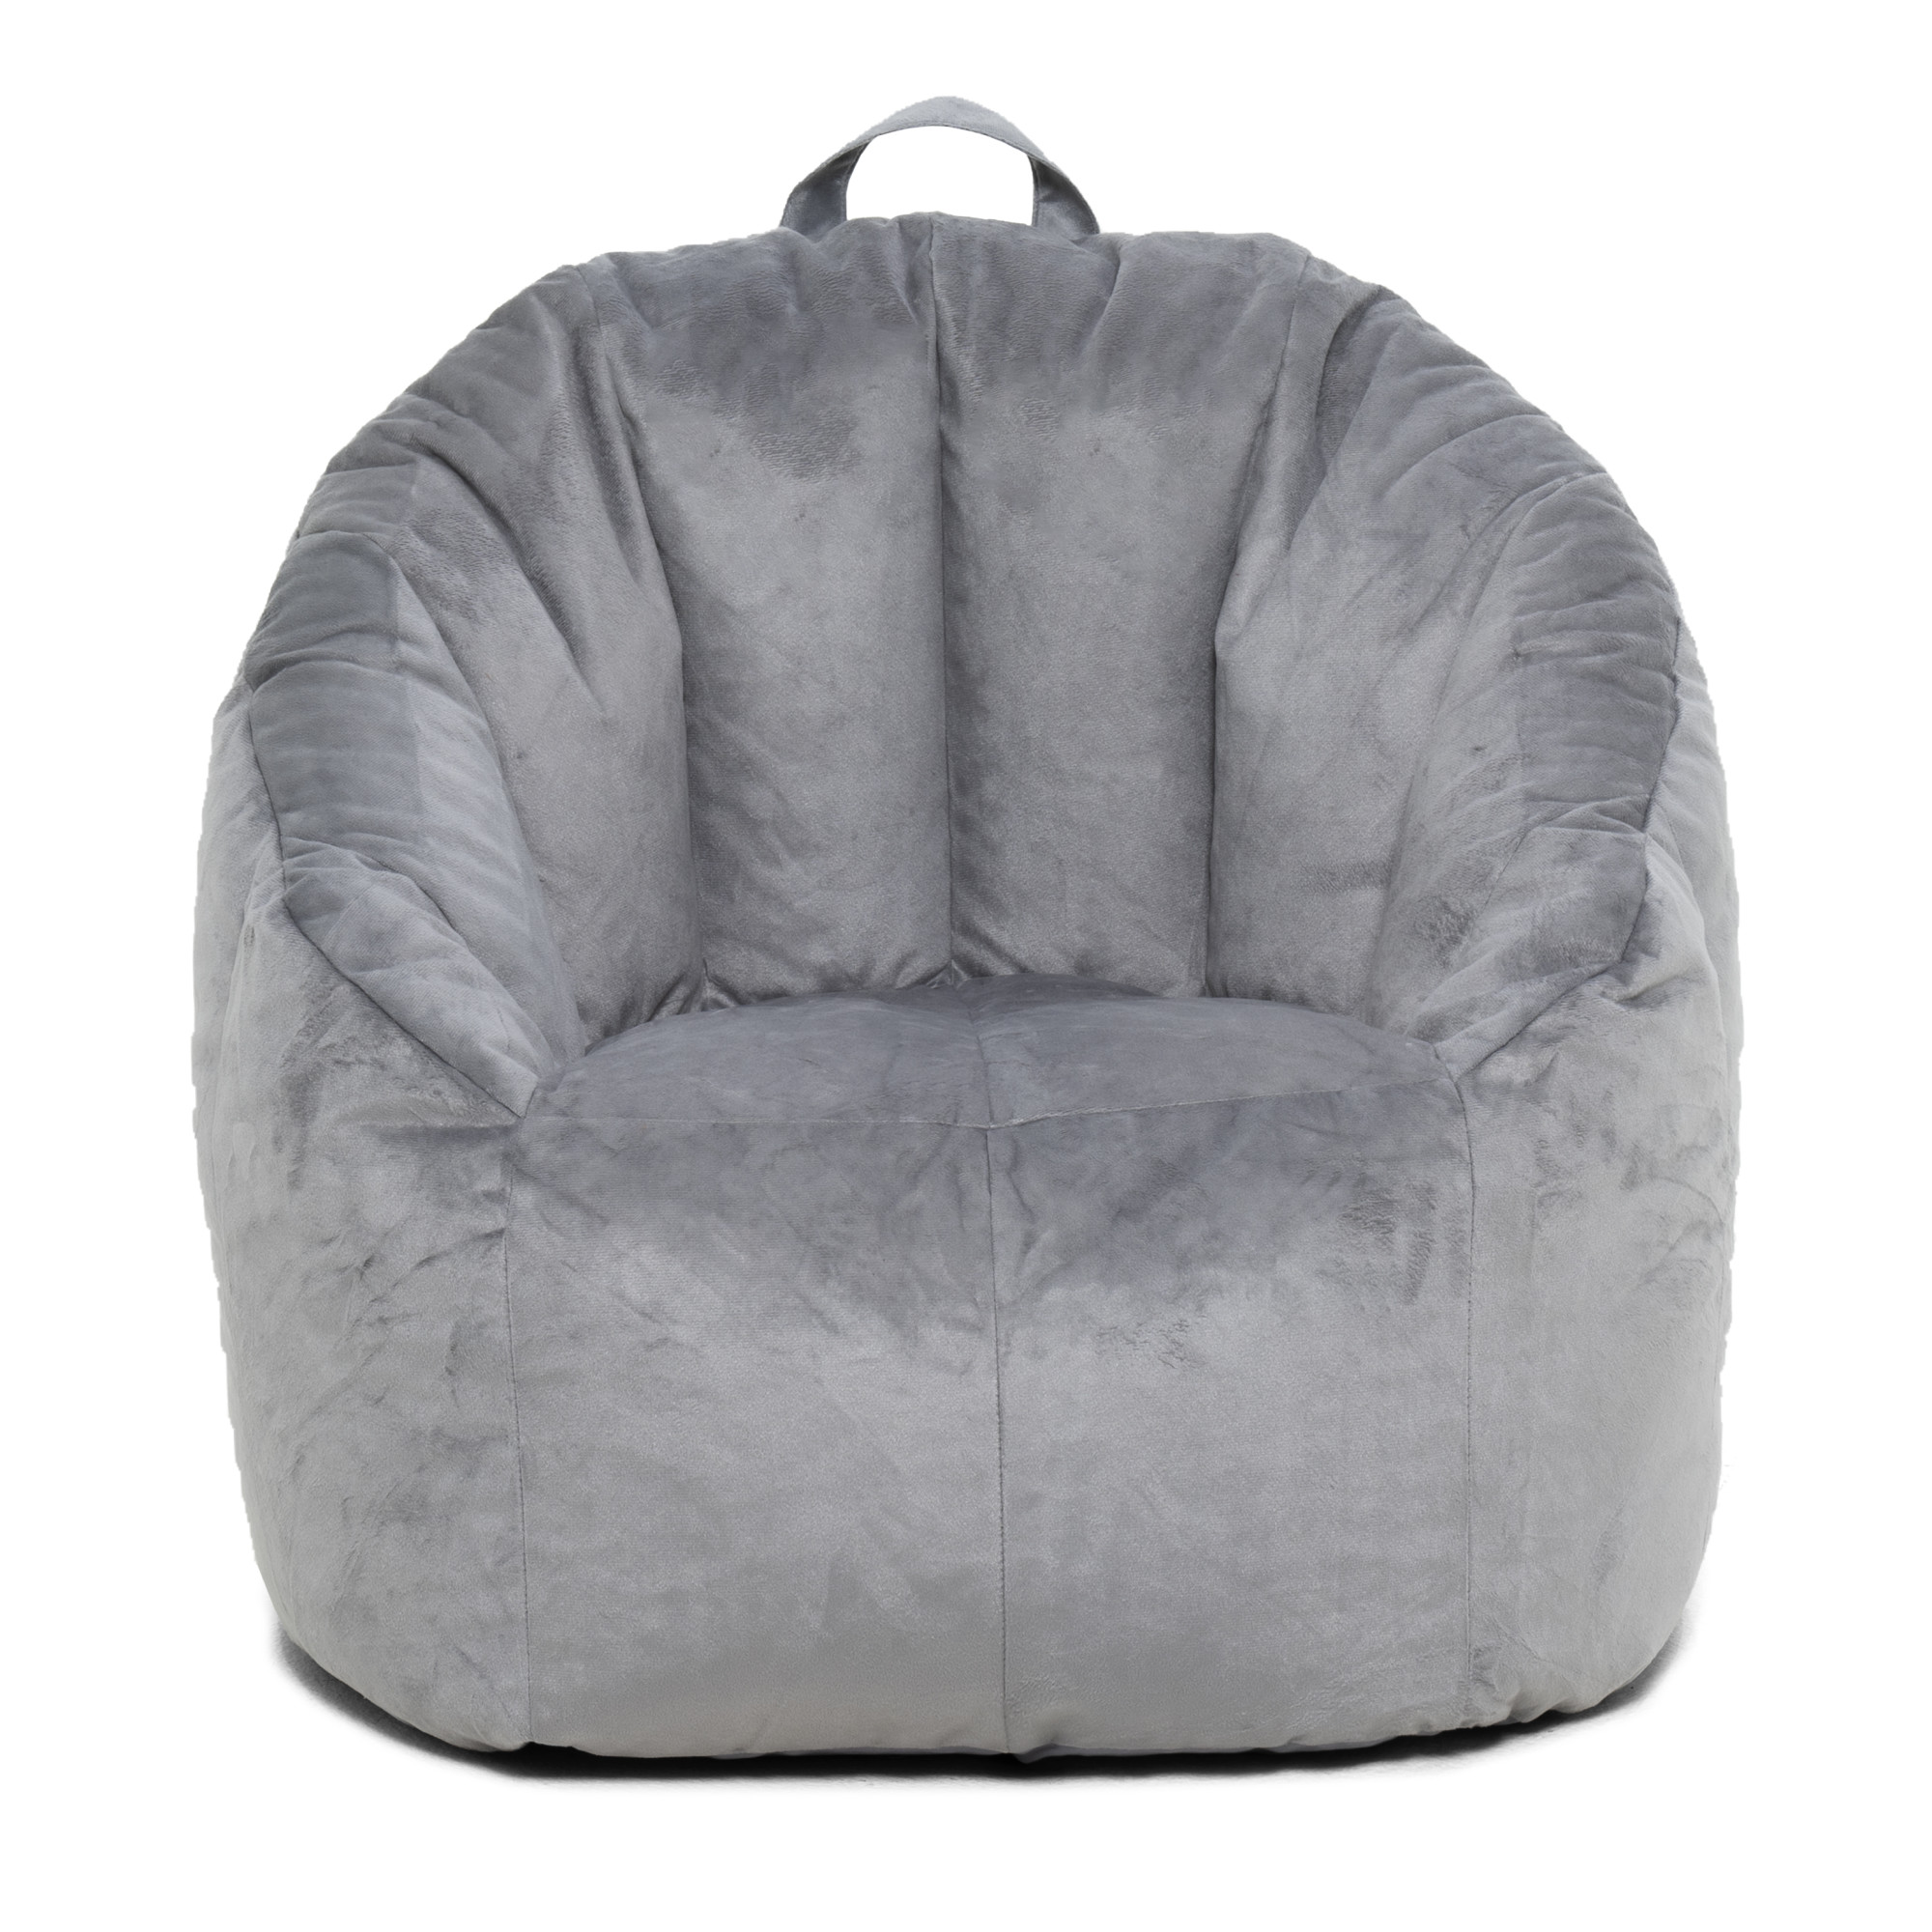 Big Joe Joey Bean Bag Chair, Plush, Kids/Teens, 2.5ft, Gray - image 1 of 9